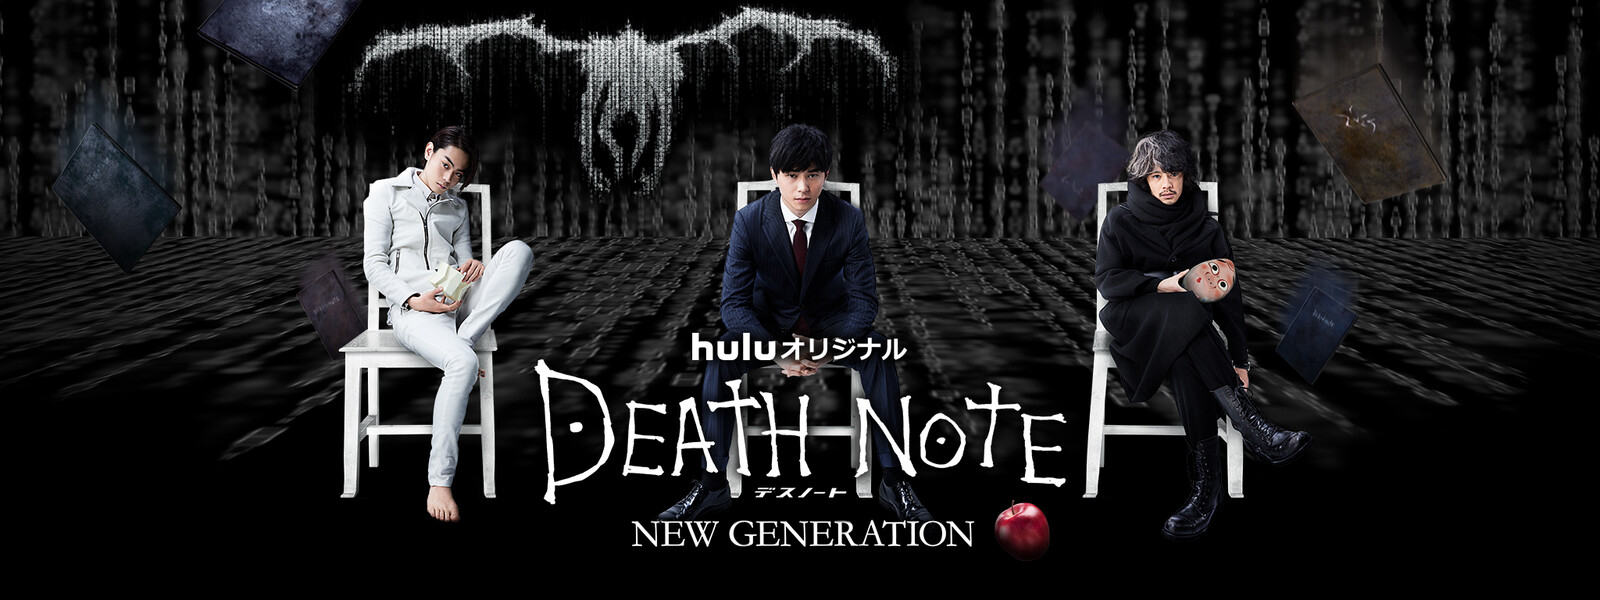 DEATH NOTE デスノート NEW GENERATIONの動画 - デスノート Light up the NEW world